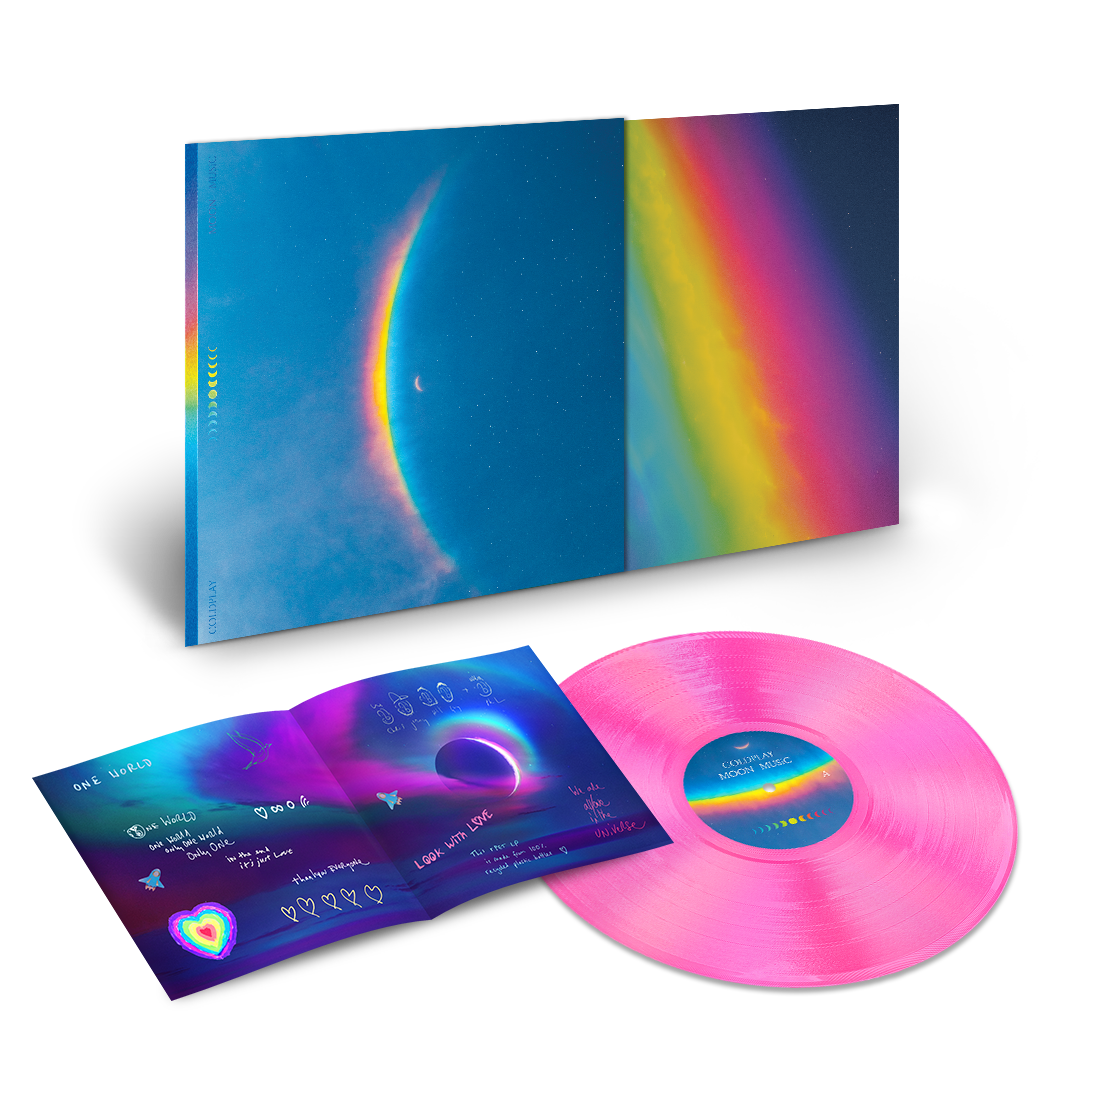 Coldplay - Moon Music: Translucent Pink Eco-Vinyl LP